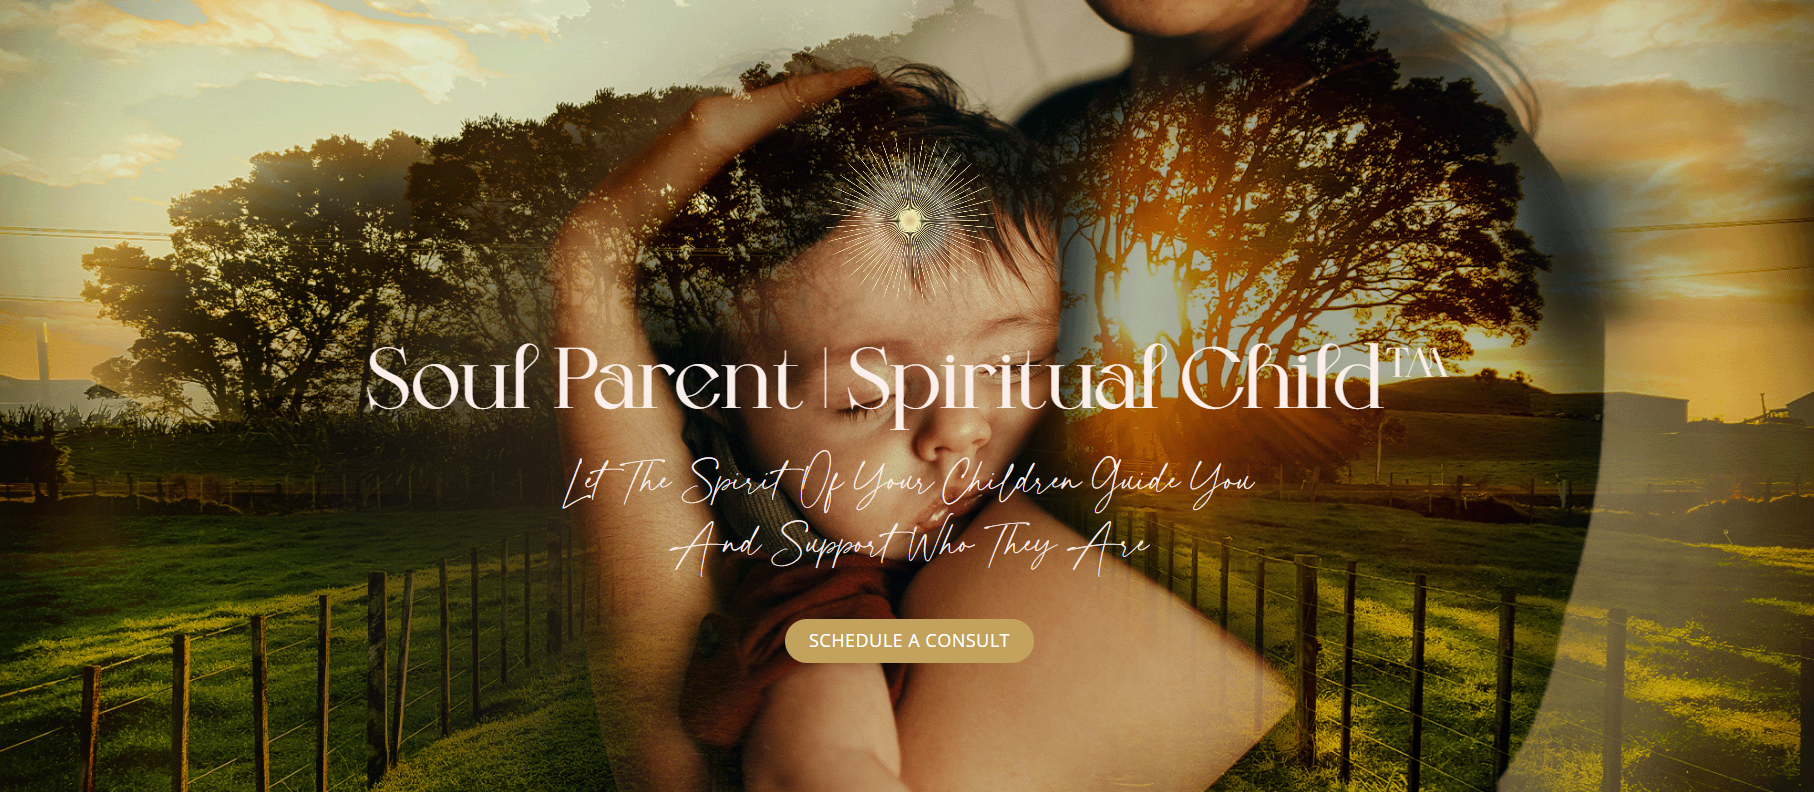 Soul Parent Spiritual Child